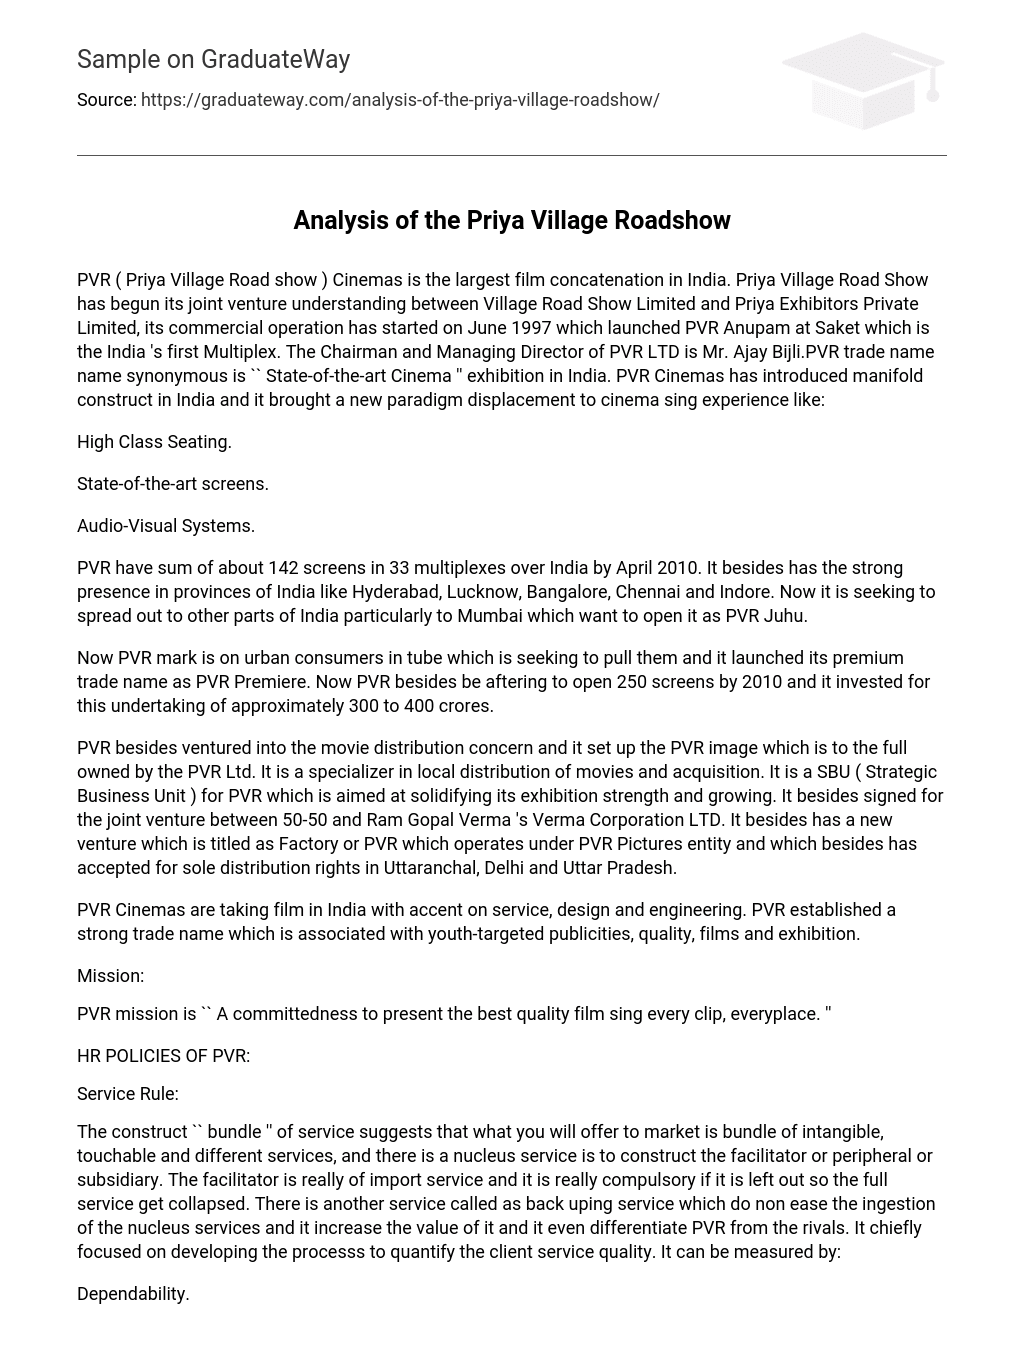 Analysis of the Priya Village Roadshow